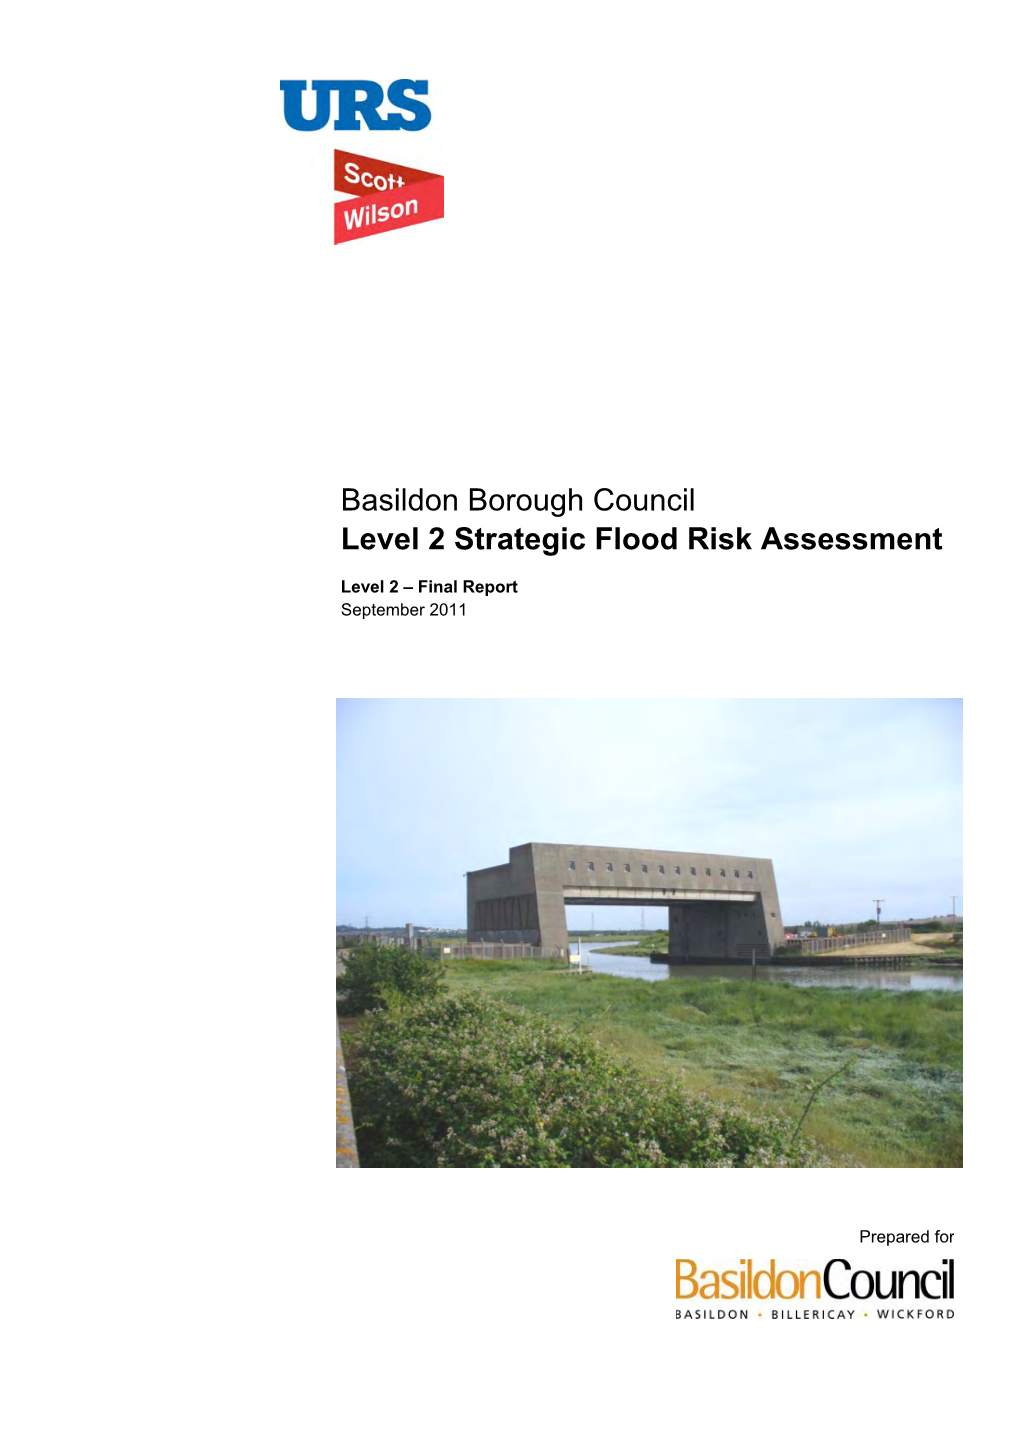 Basildon Borough Council Level 2 Strategic Flood Risk Assessment